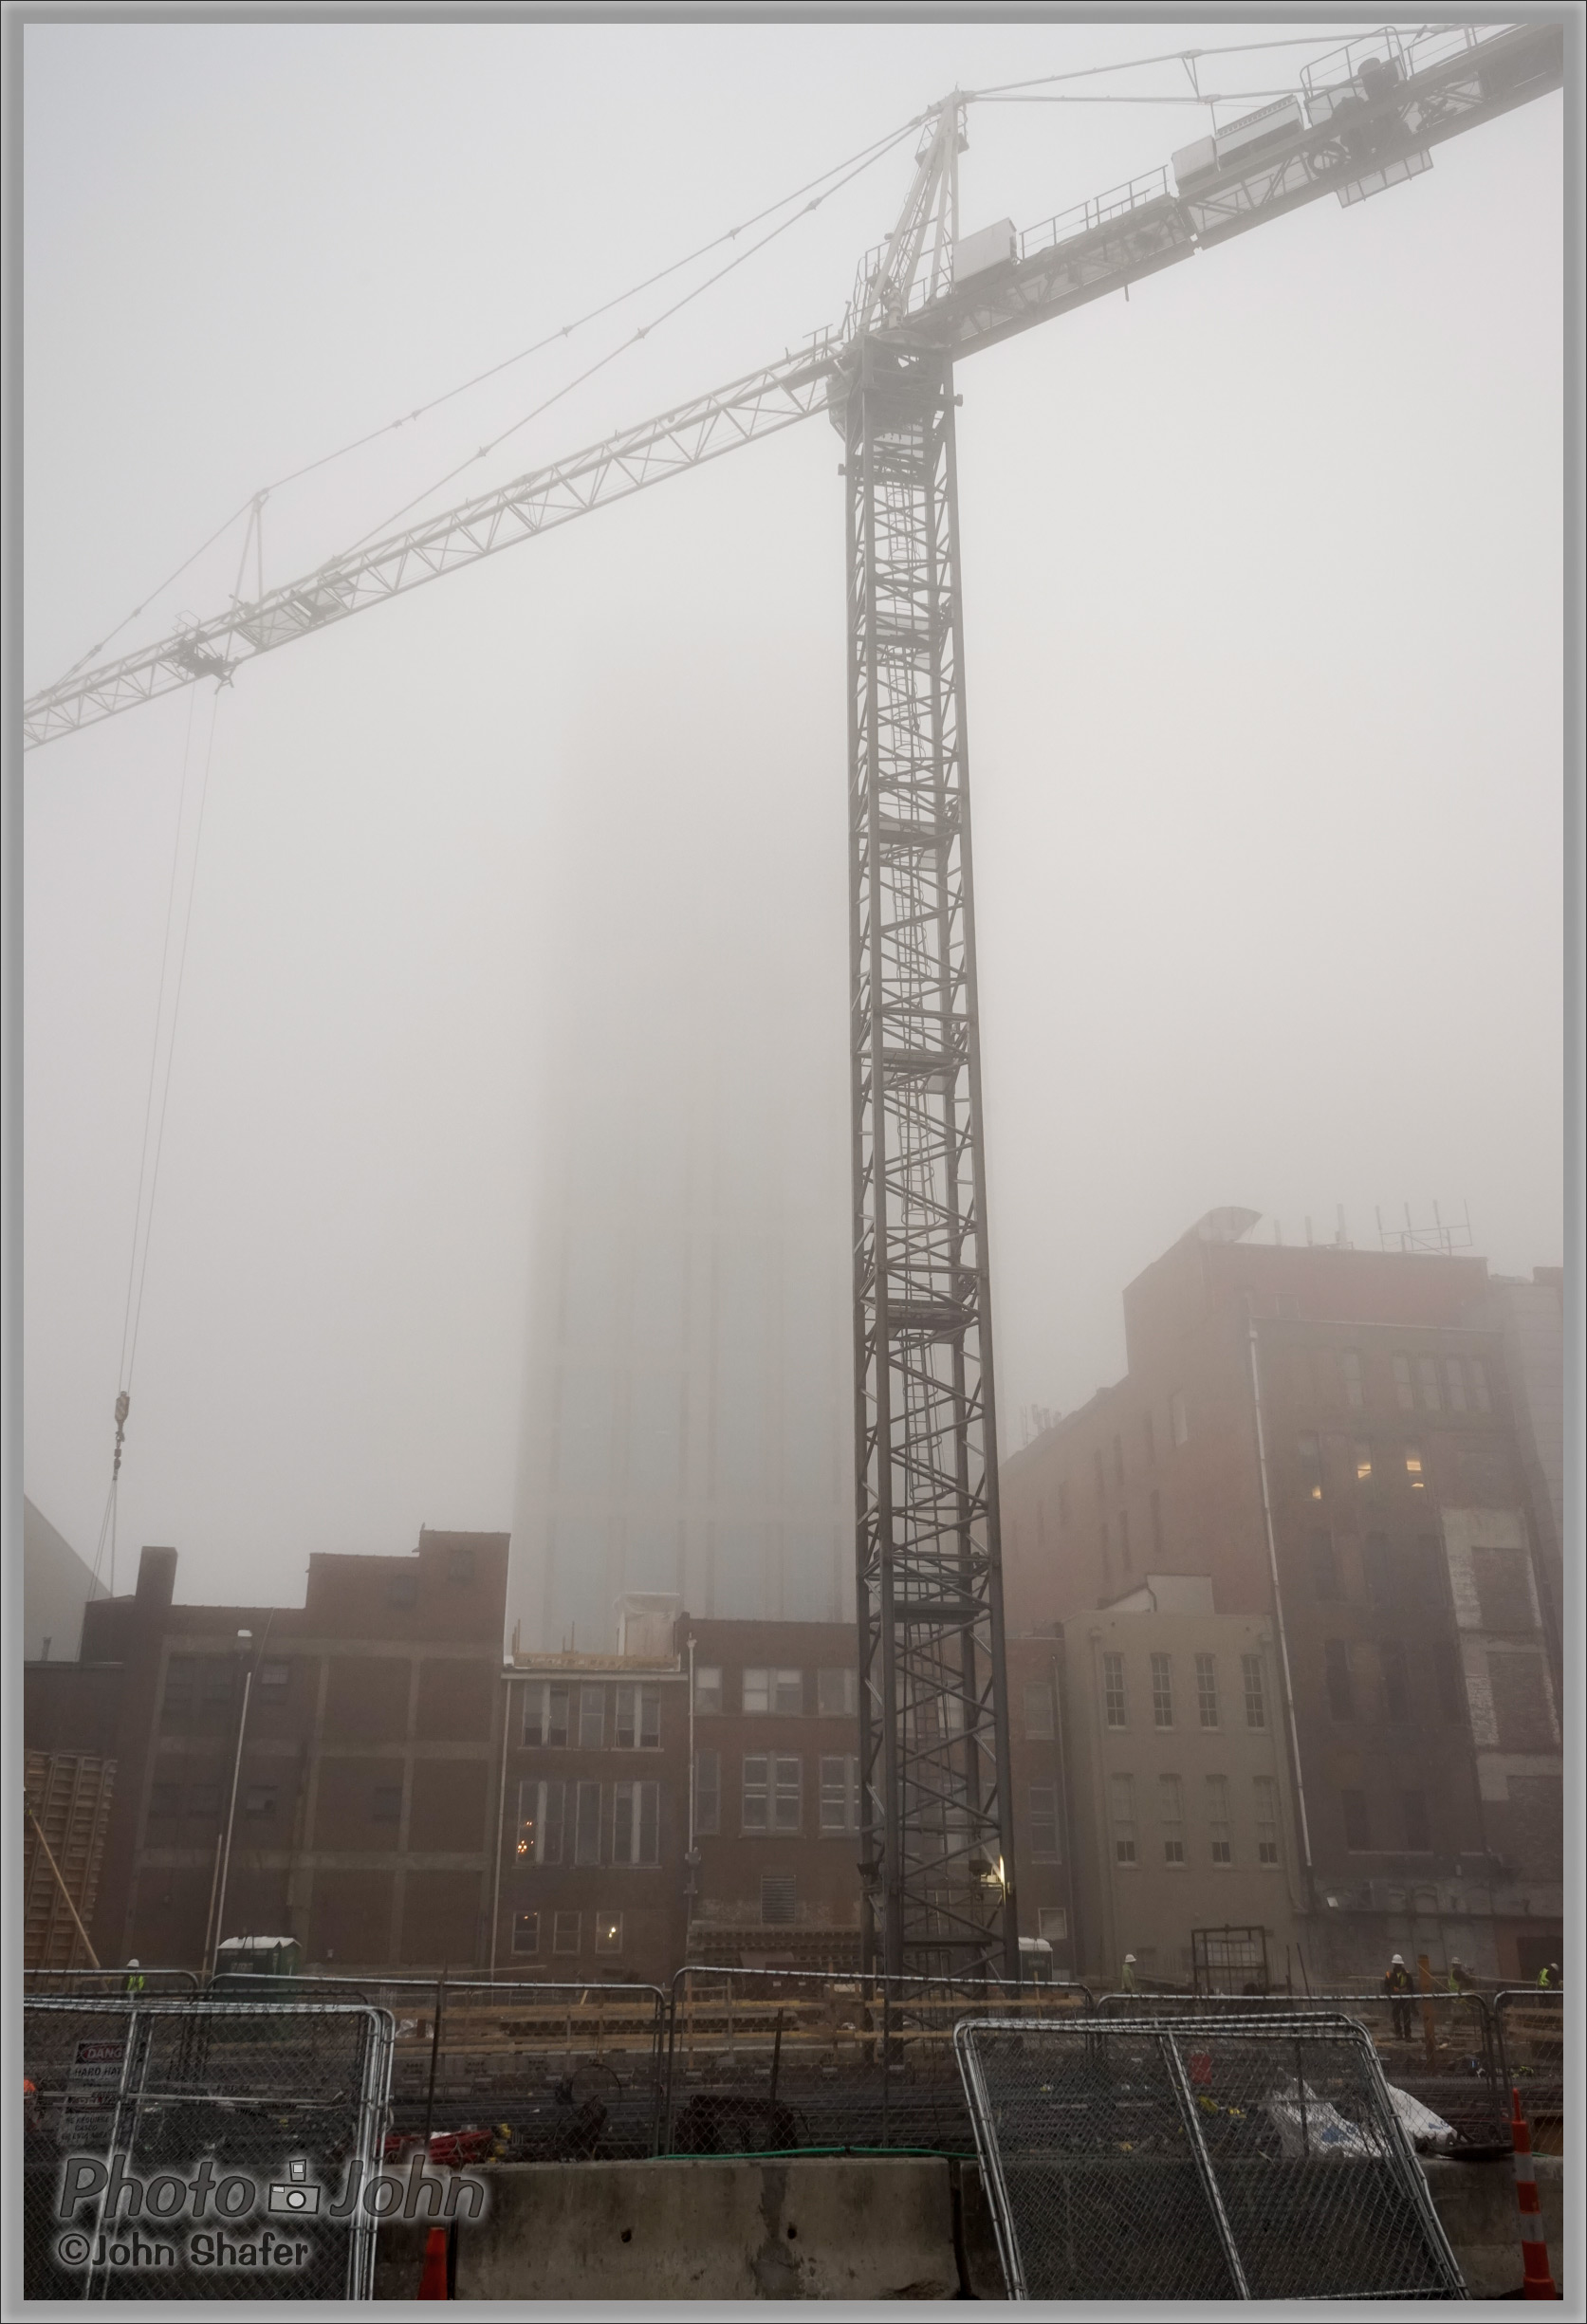 Sony Alpha A7 - Crane & Fog - Nashville, Tennessee